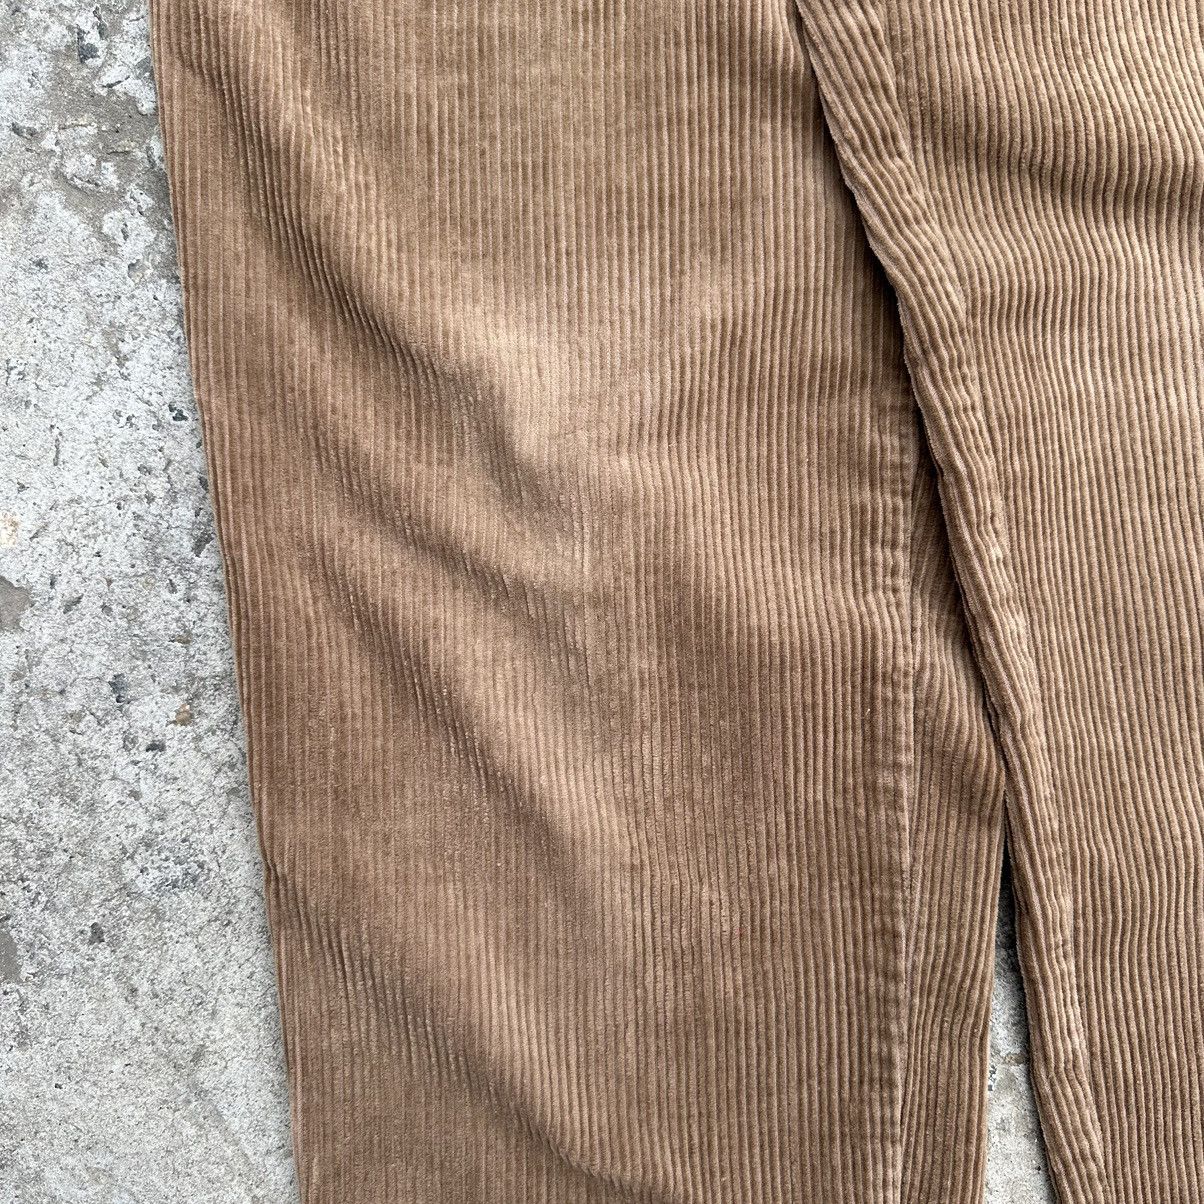 Vintage Vintage Corduroy Pants Marlboro Classic velveteen 90s Size US 32 / EU 48 - 6 Thumbnail